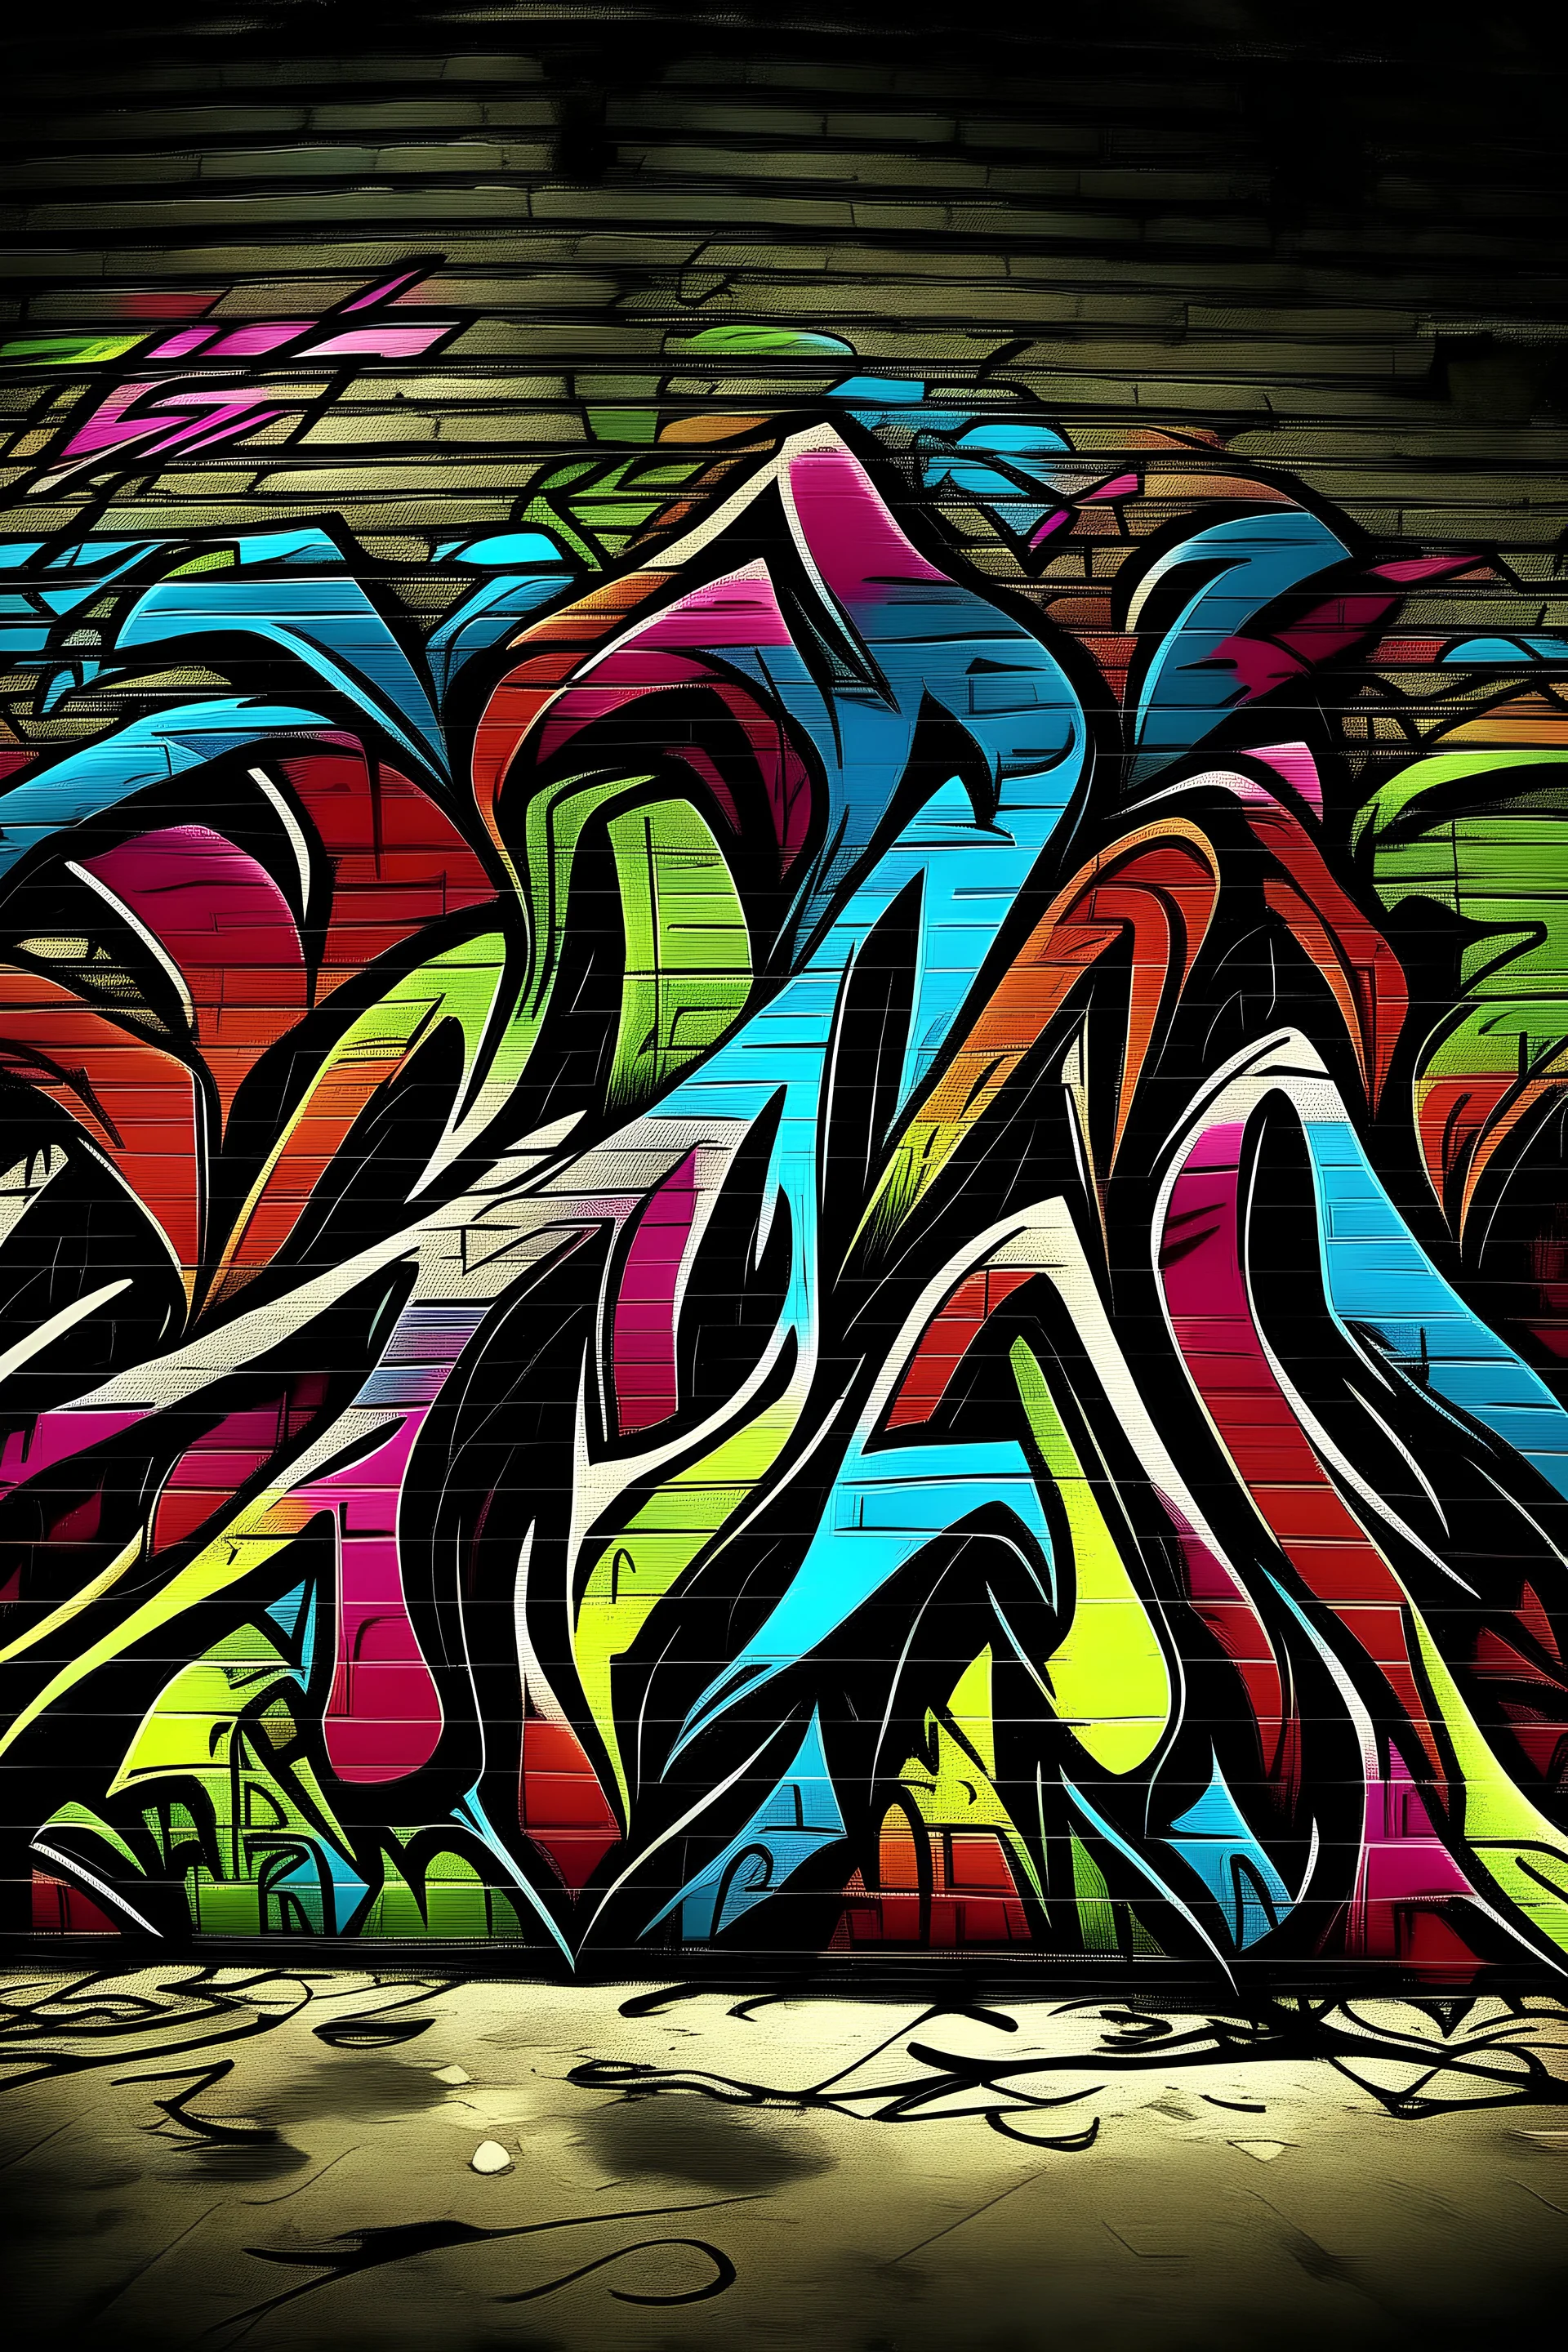 "Maria" graffiti style